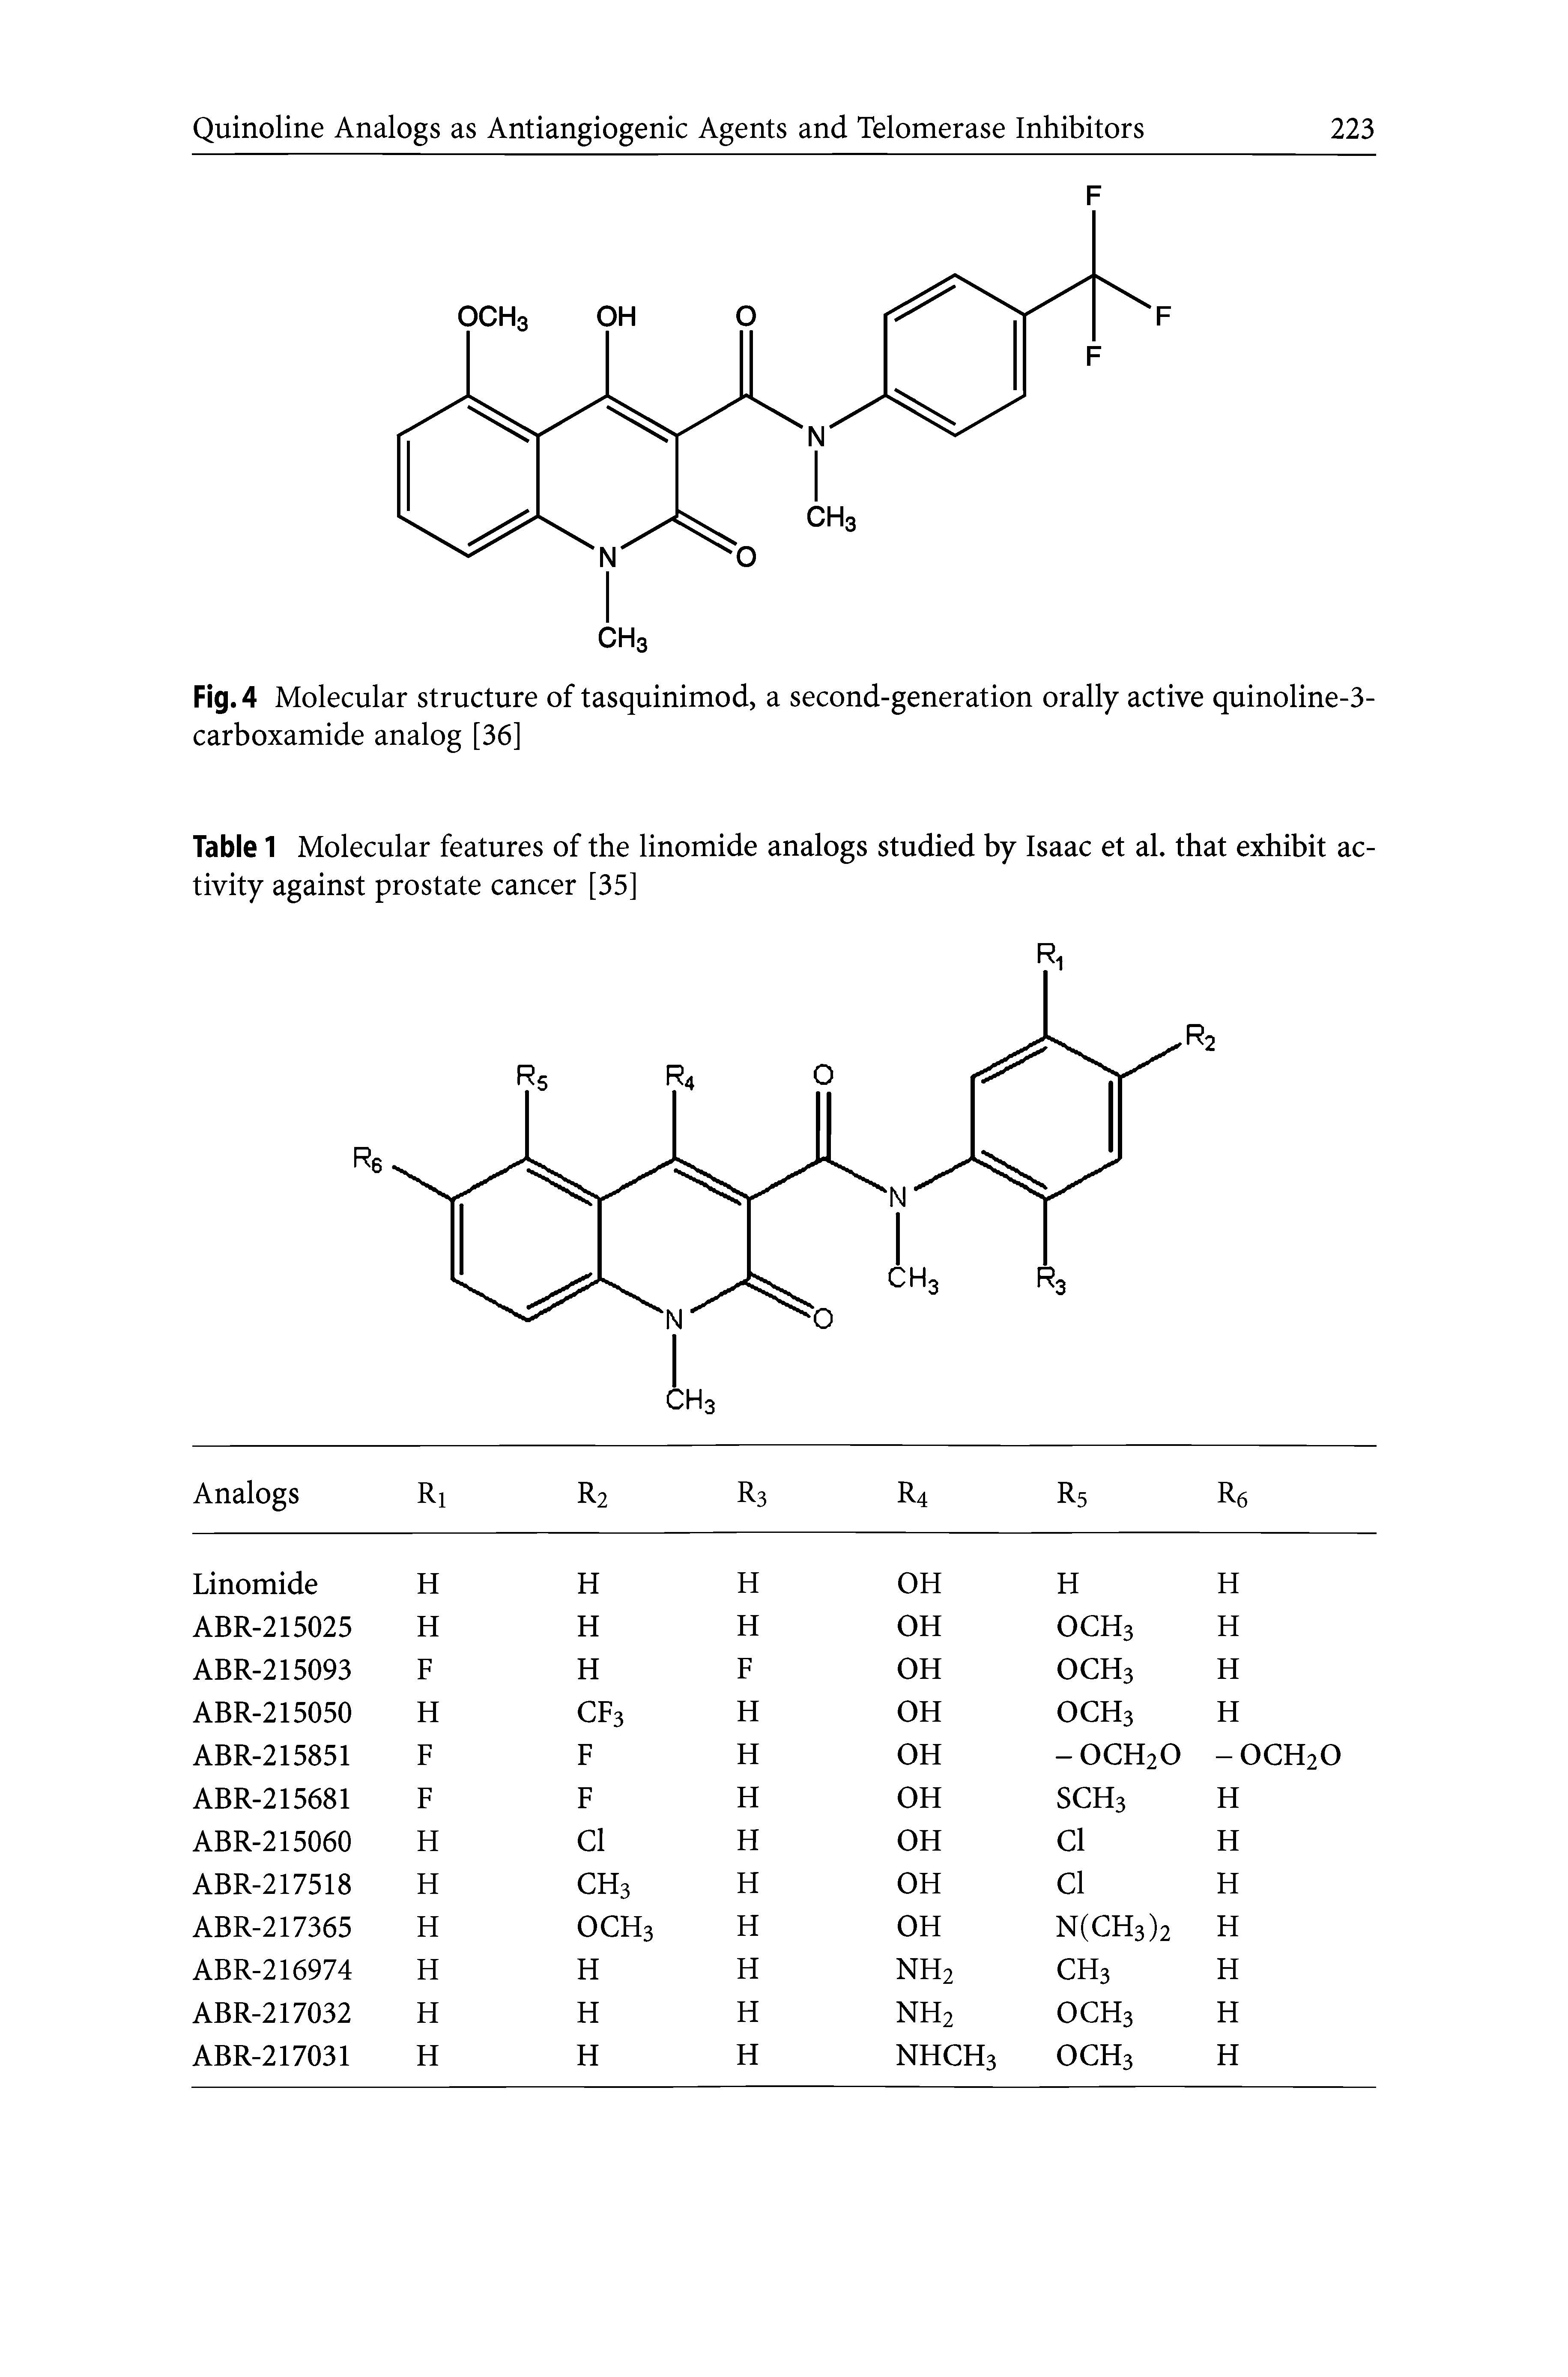 Fig. 4 Molecular structure of tasquinimod, a second-generation orally active quinoline-3-carboxamide analog [36]...